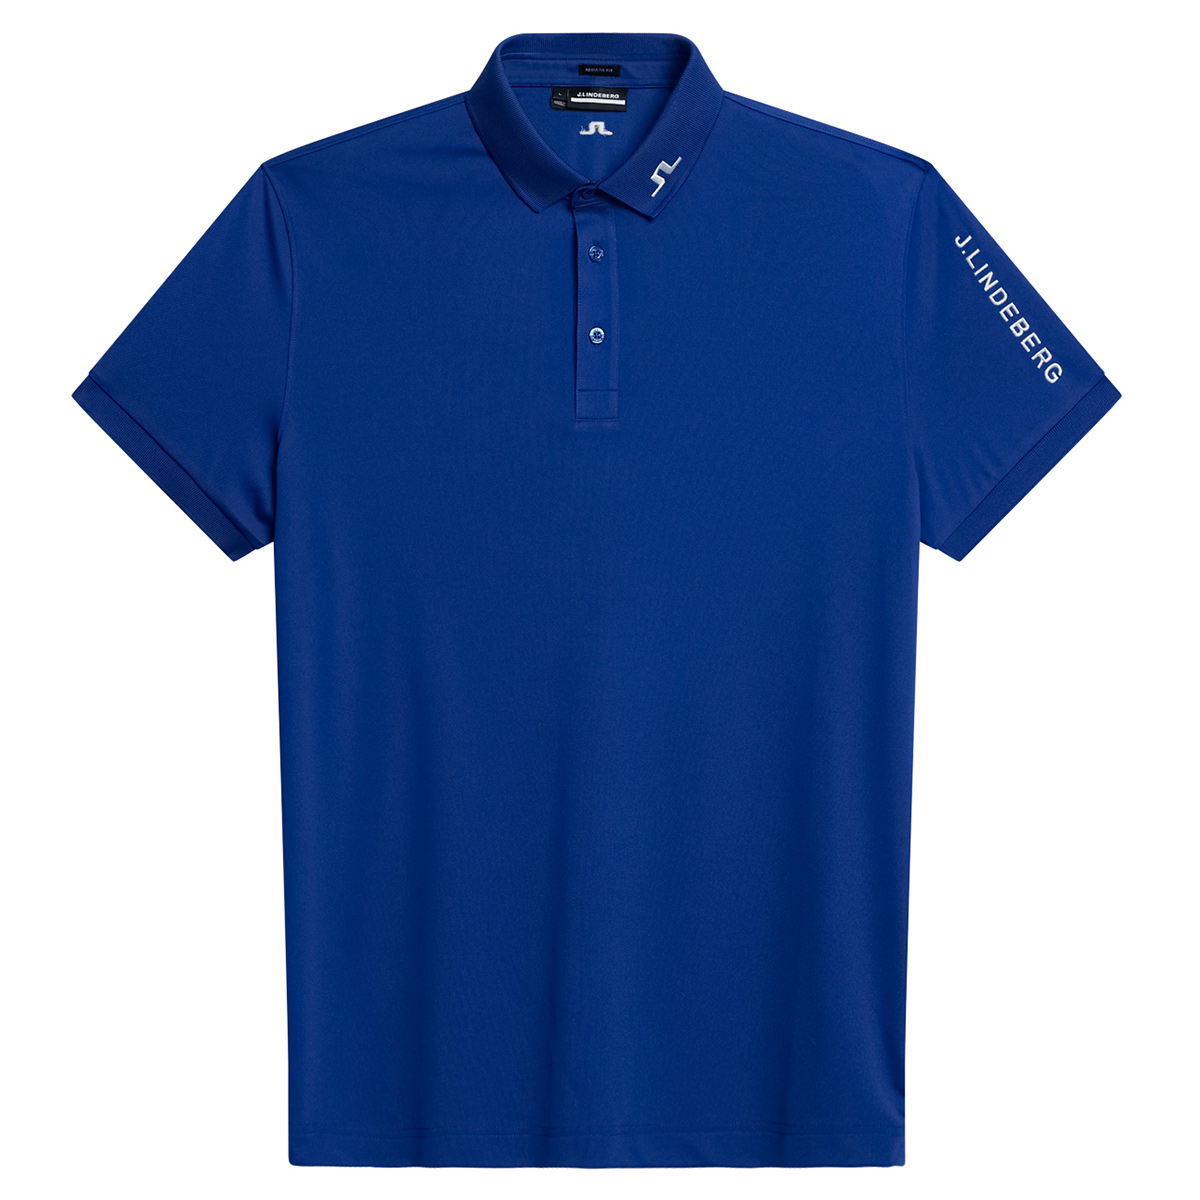 J.Lindeberg Men's Tour Tech Golf Polo Shirt from american golf